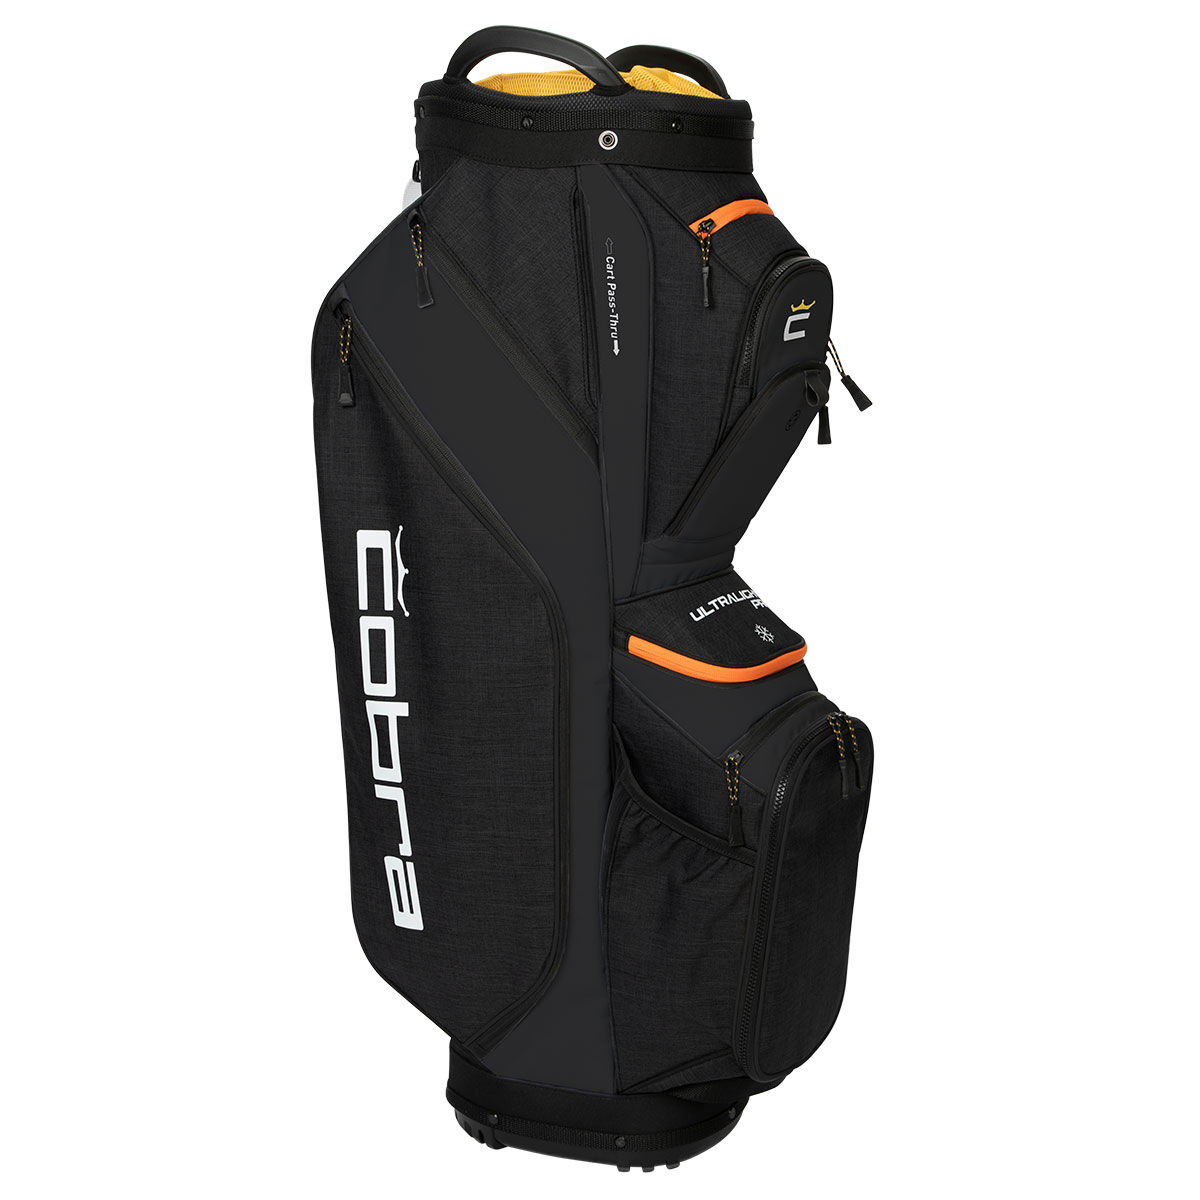 Cobra Golf Black and Gold Lightweight ULTRALIGHT Pro Golf Cart Bag | American Golf, One Size